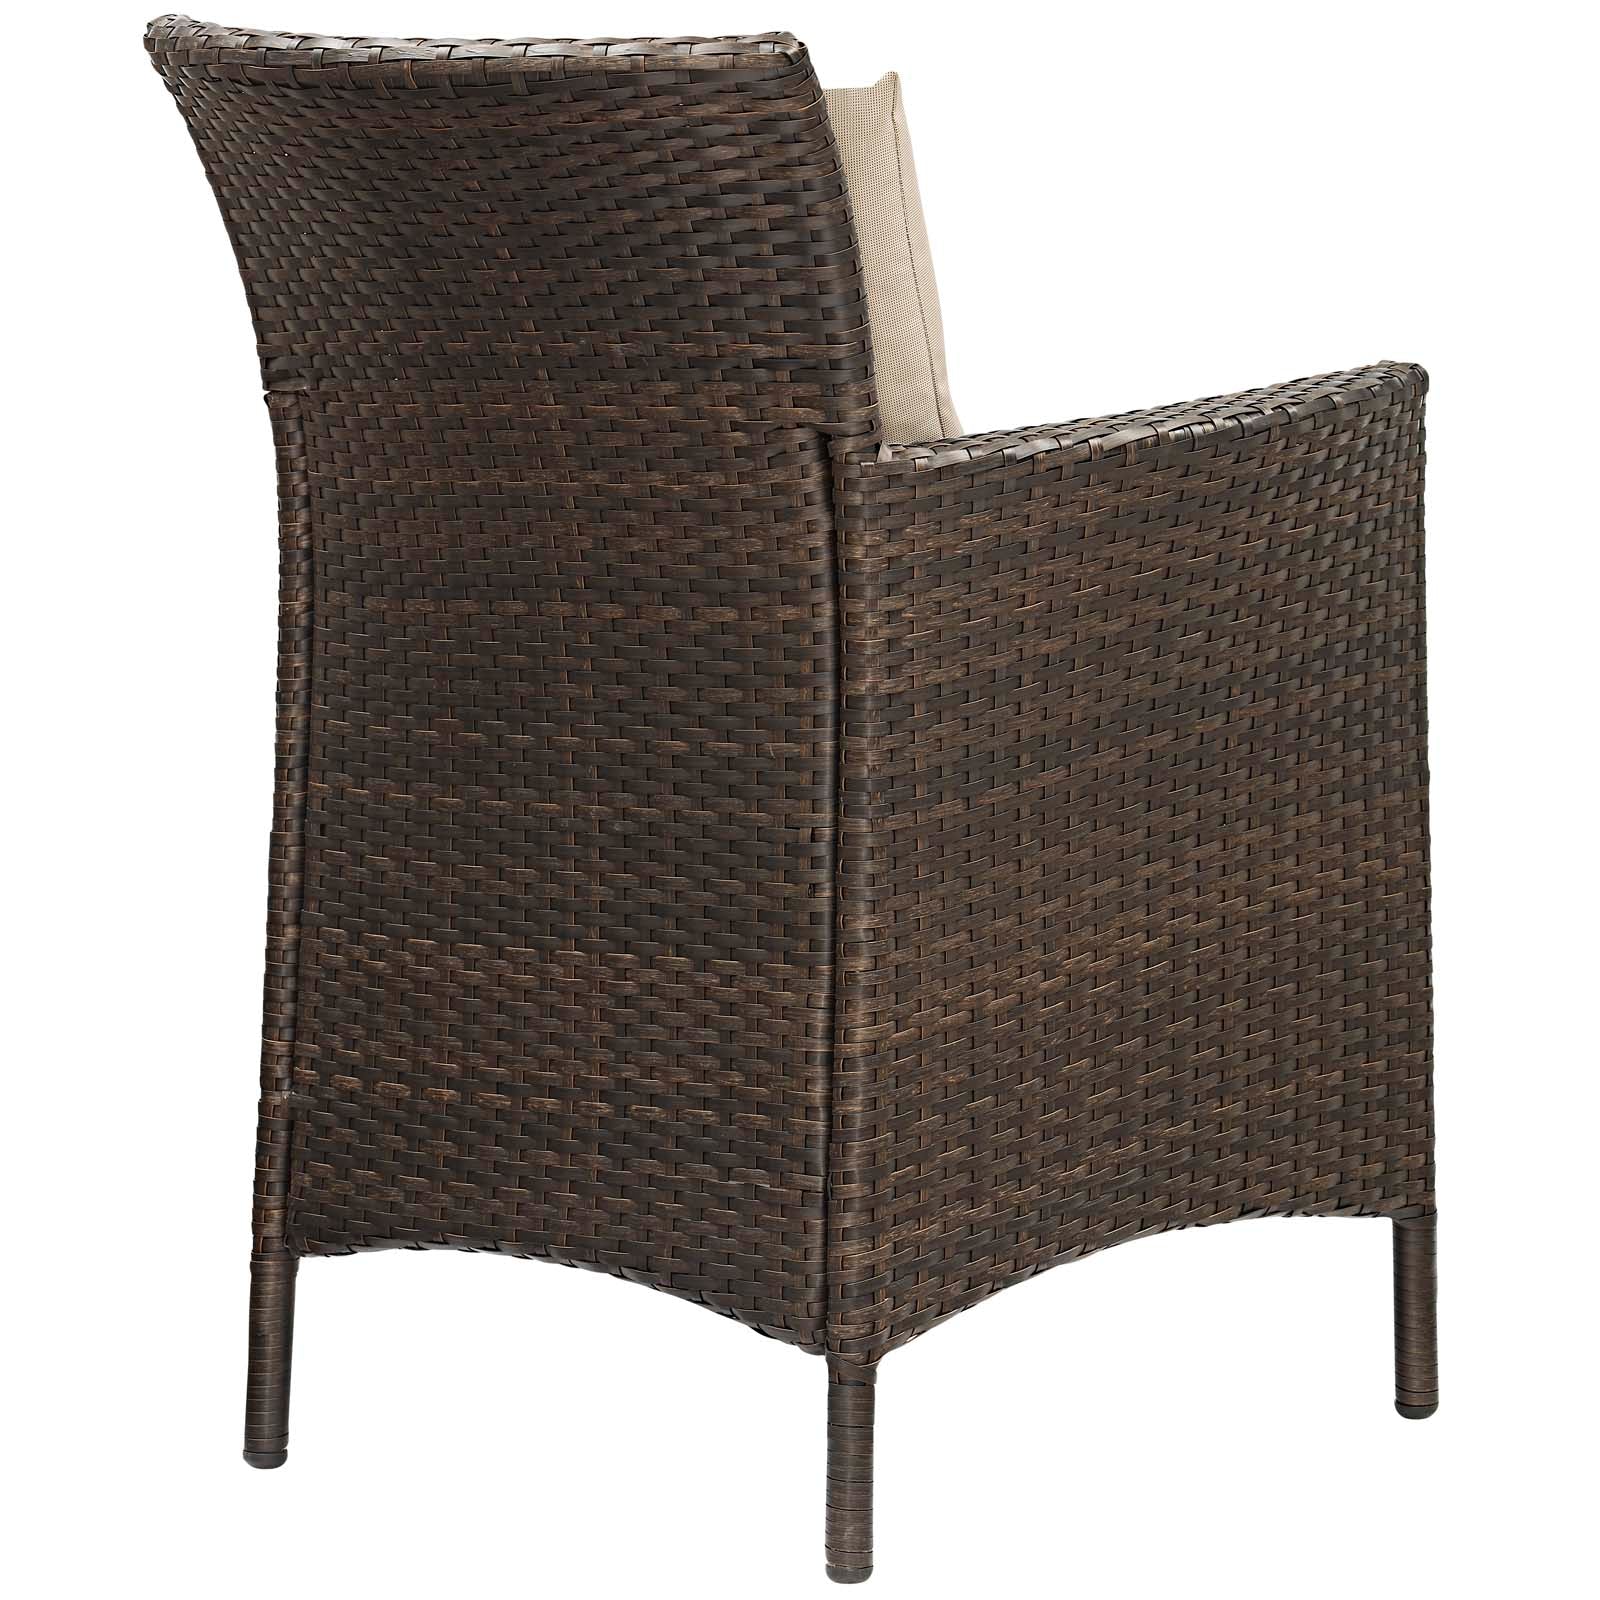 Modway Outdoor Chairs - Conduit Outdoor Patio Wicker Rattan Dining Armchair Brown Beige